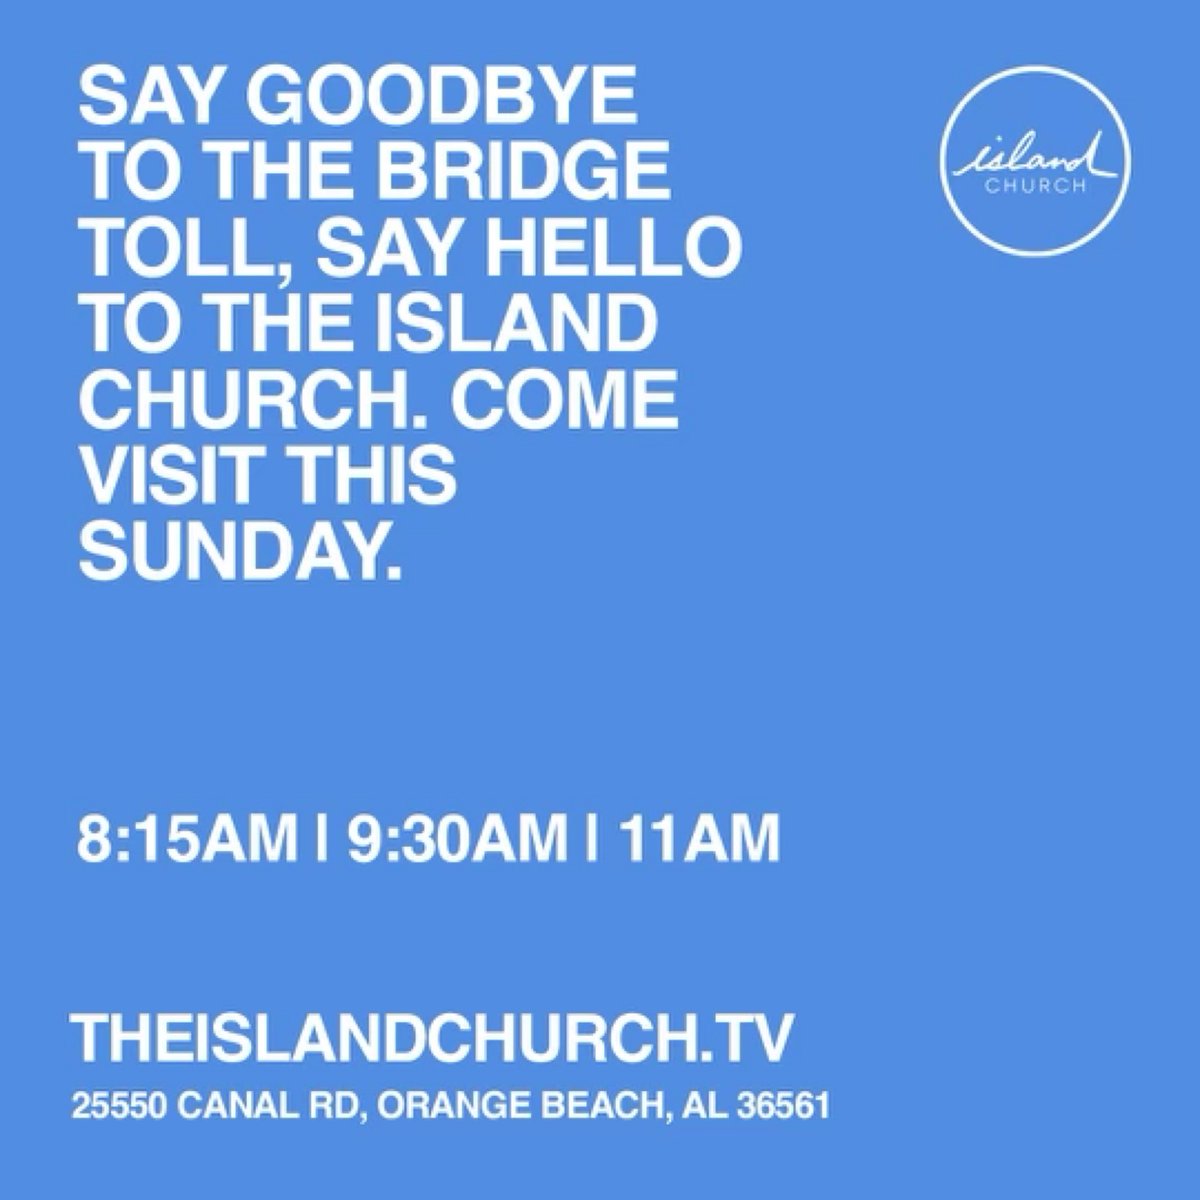 Come visit the Island Church in Orange Beach, AL. . 

#TheIslandChurch
#OrangeBeach